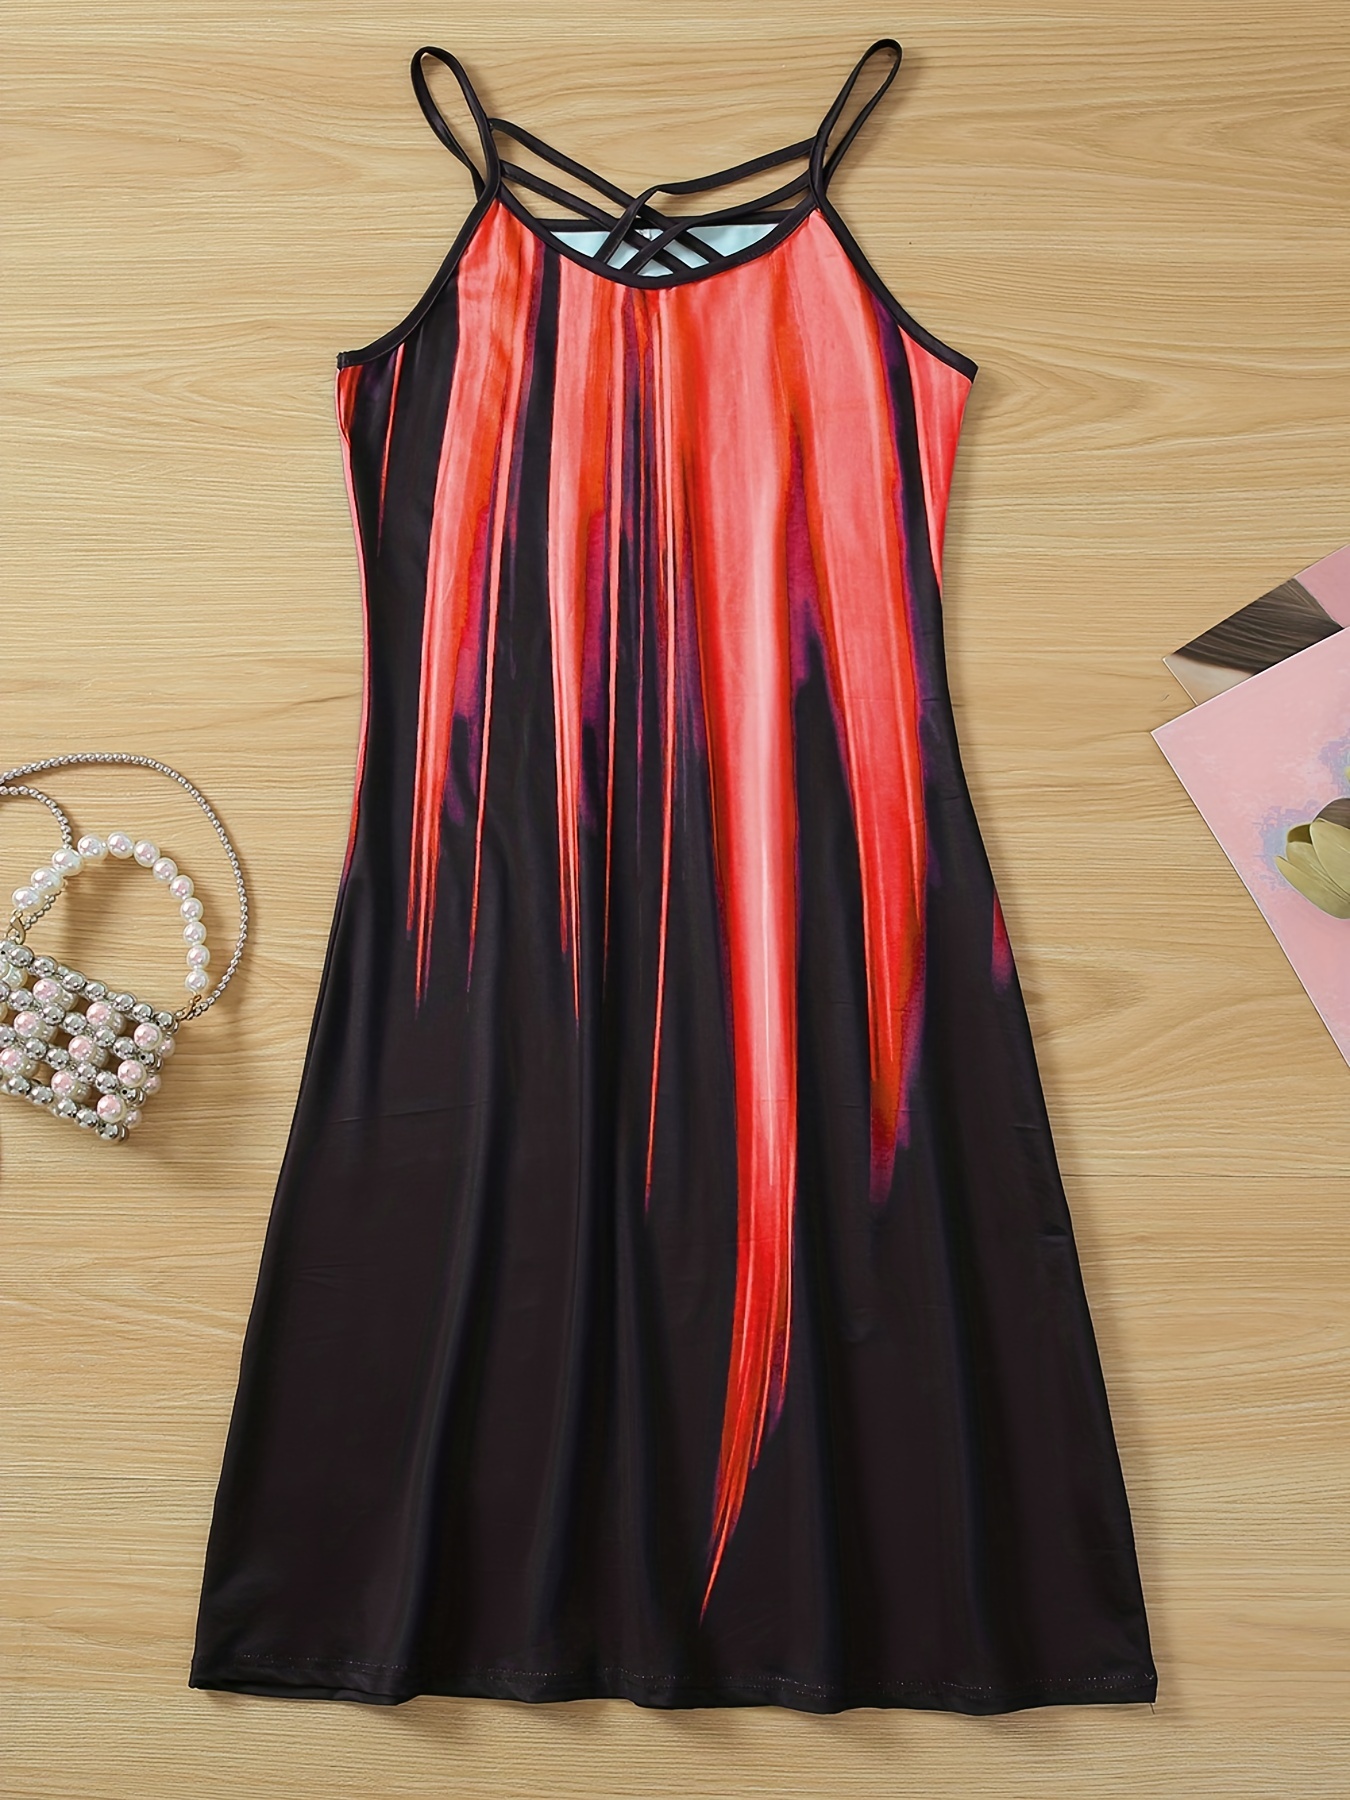 color block criss cross dress casual sleeveless spaghetti strap dress womens clothing details 1